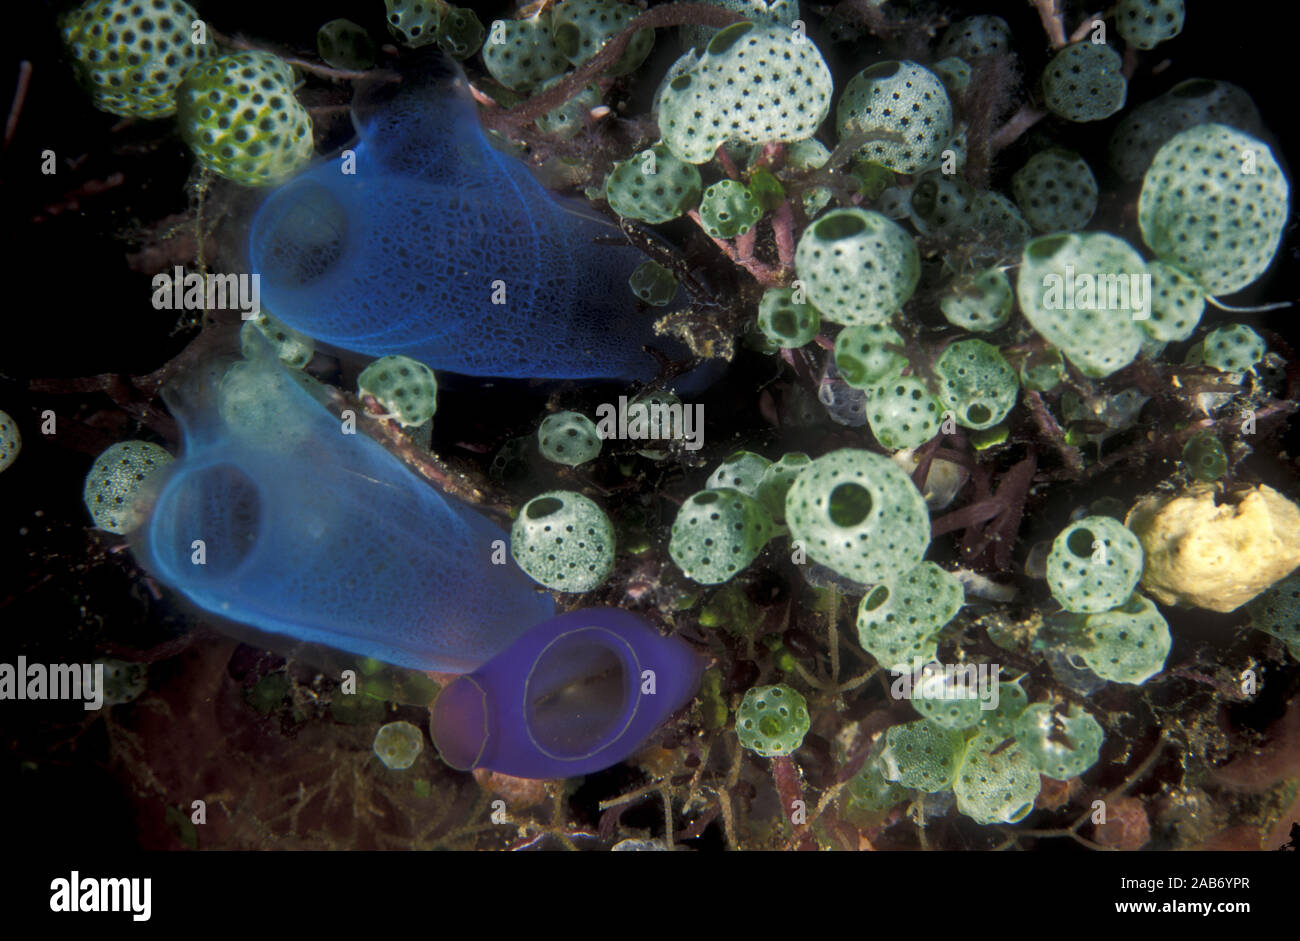 Blue vase ascidian (Rhopalaea crassa), solitary ascidians, amidst colonial Urn ascidians (Didemnum molle). Ambon, Indonesia Stock Photo